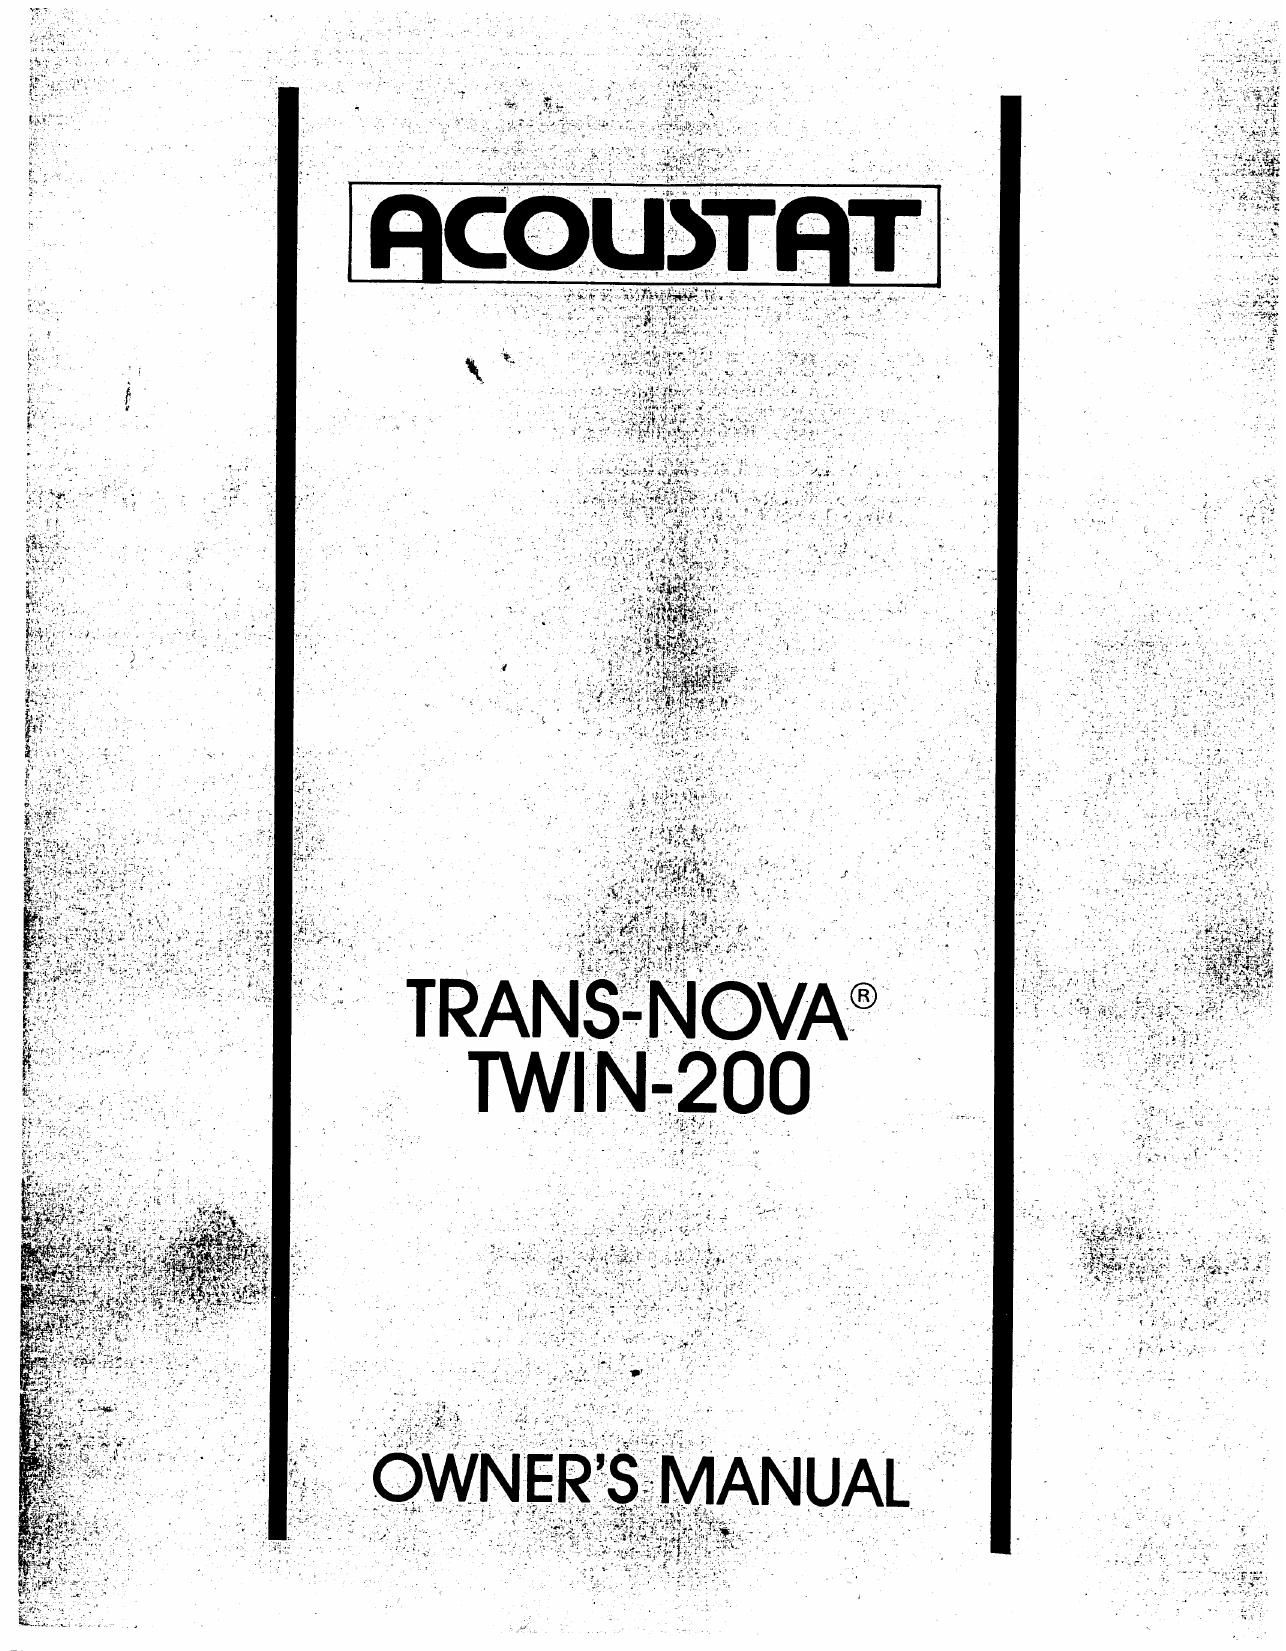 Acoustat Trans Nova Twin 200 Owners Manual